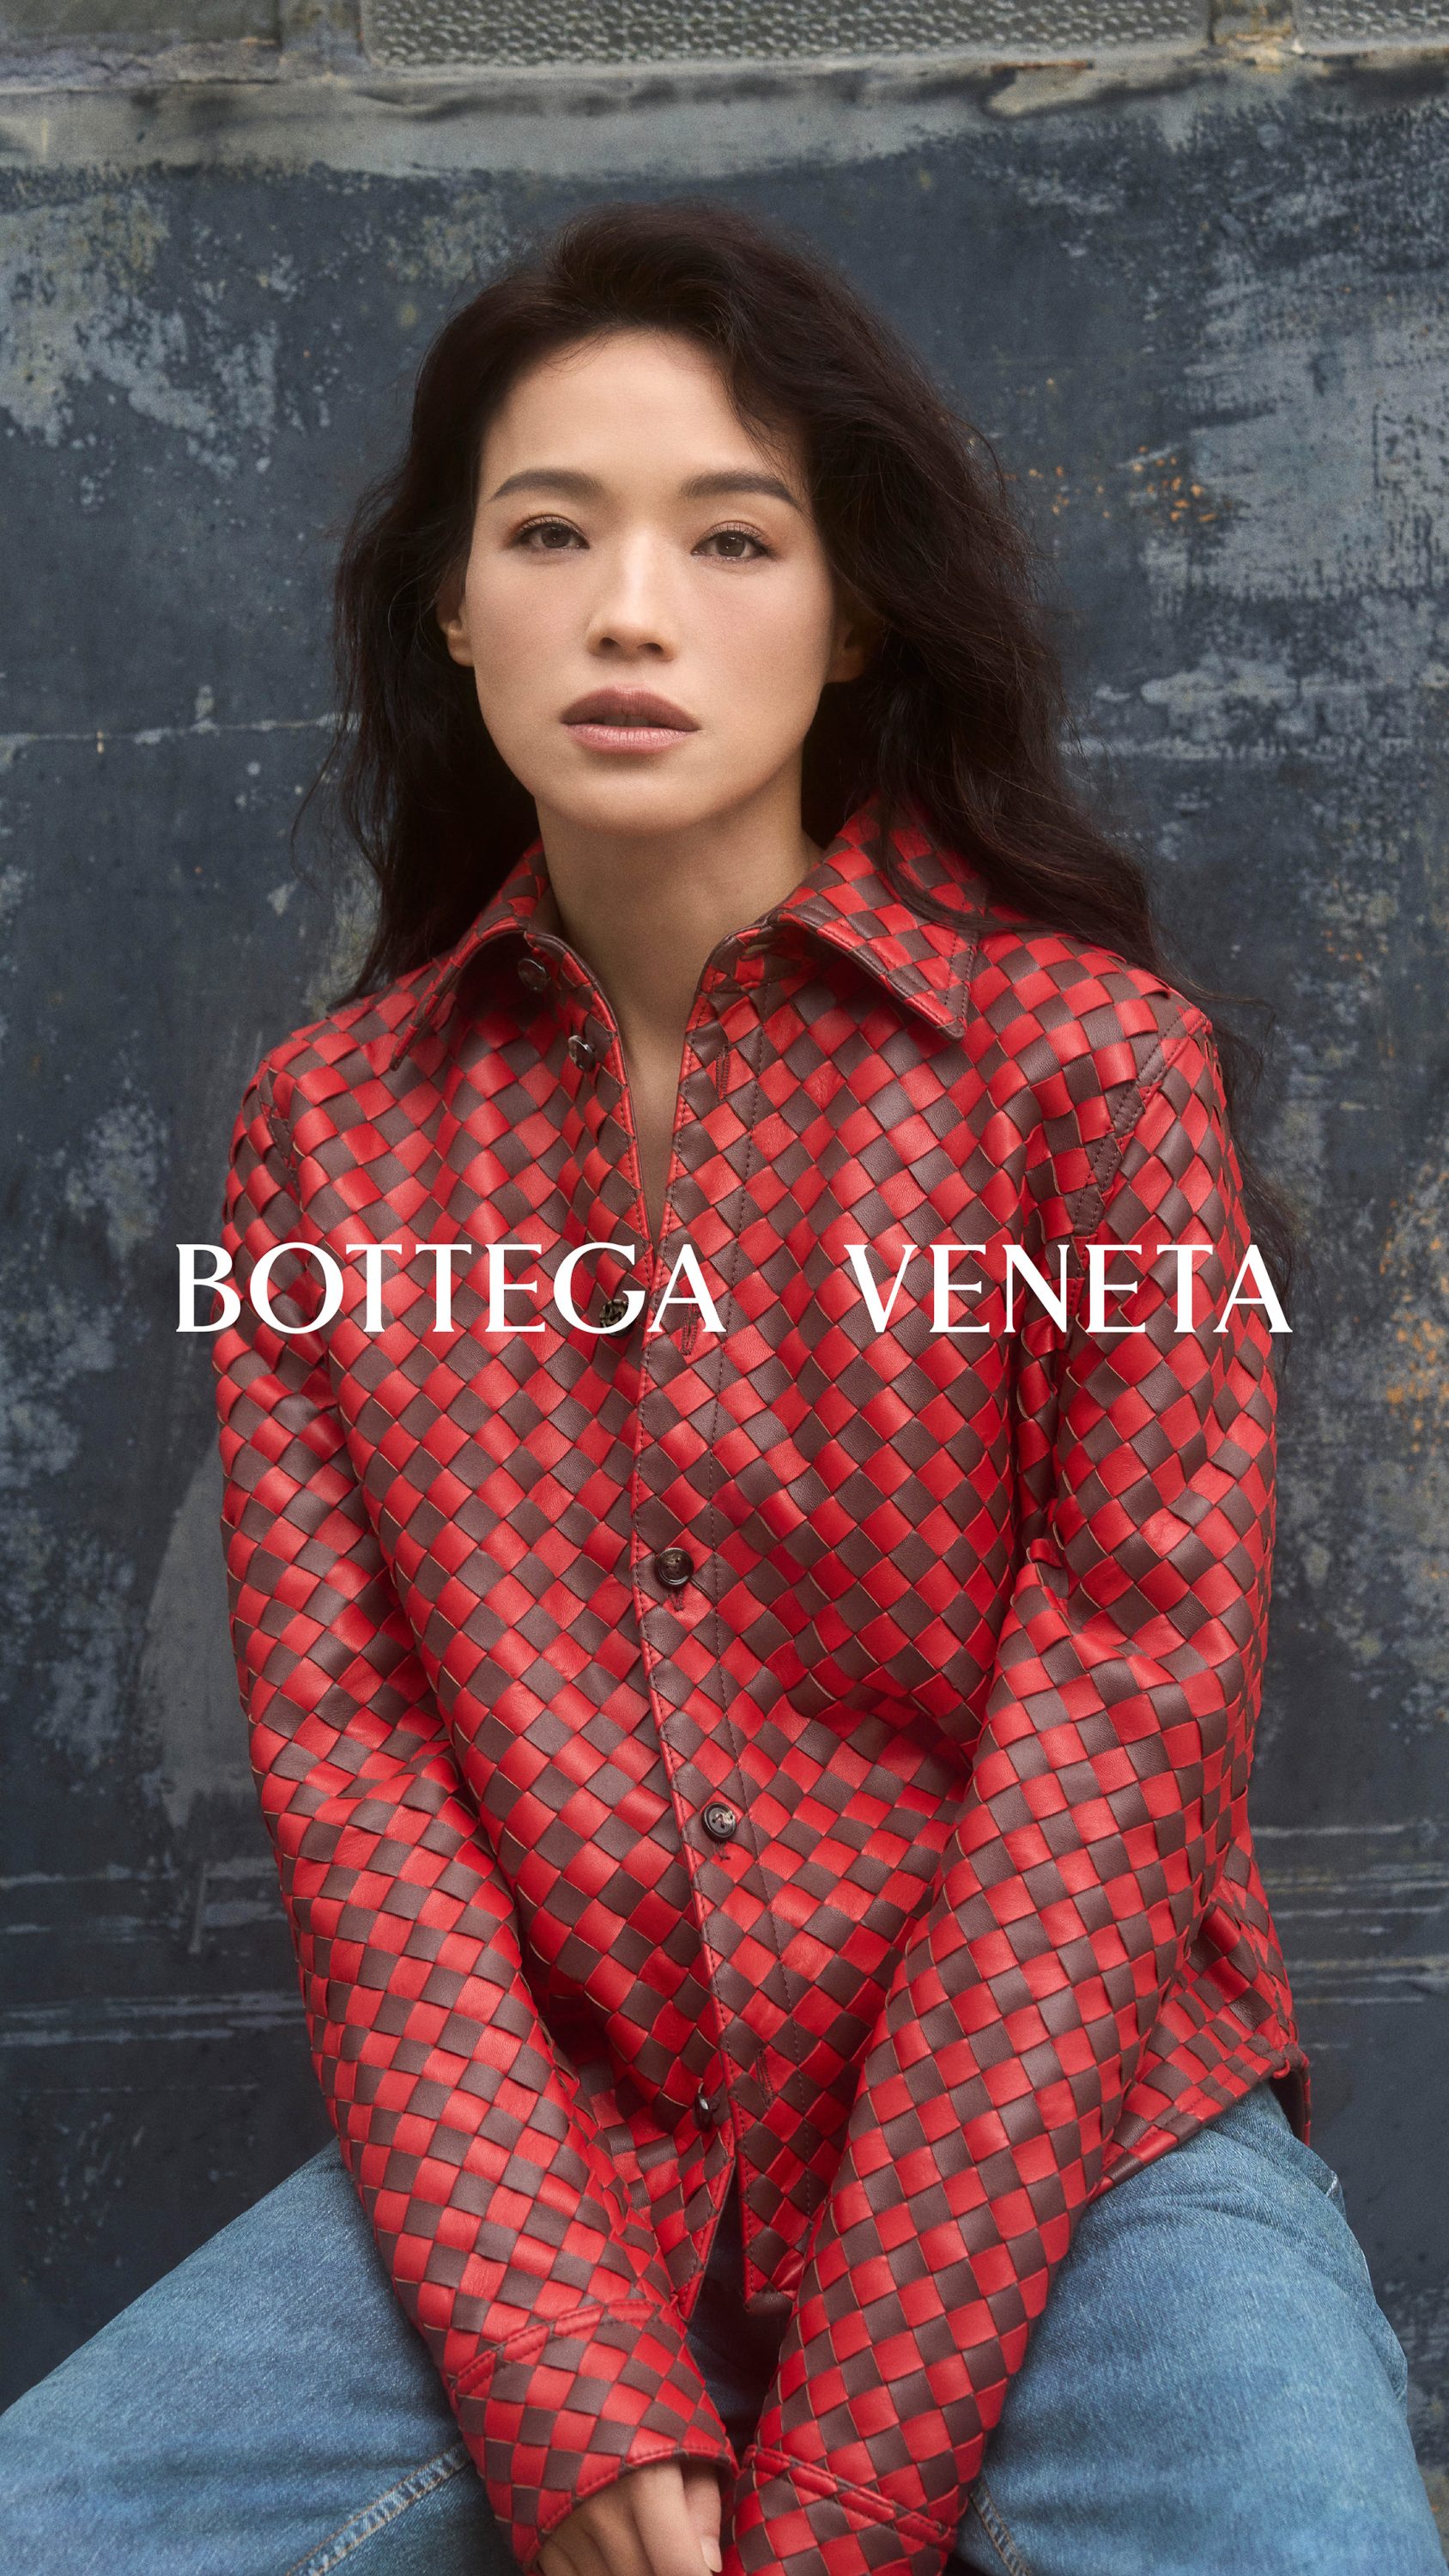 The great brand story of Bottega Veneta